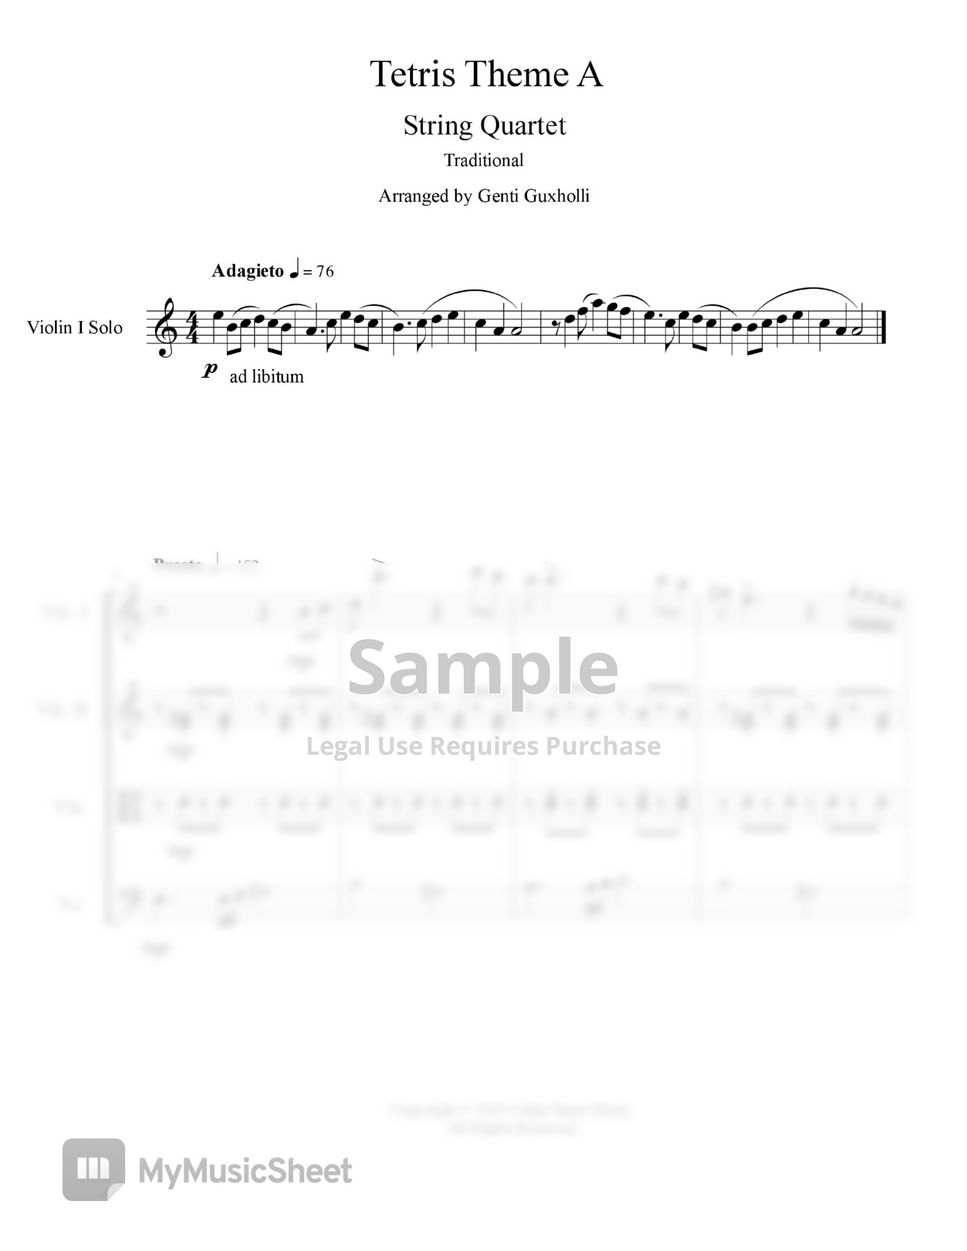 Tetris - Korobeiniki (Tetris Theme A) (String Quartet) by Genti Guxholli